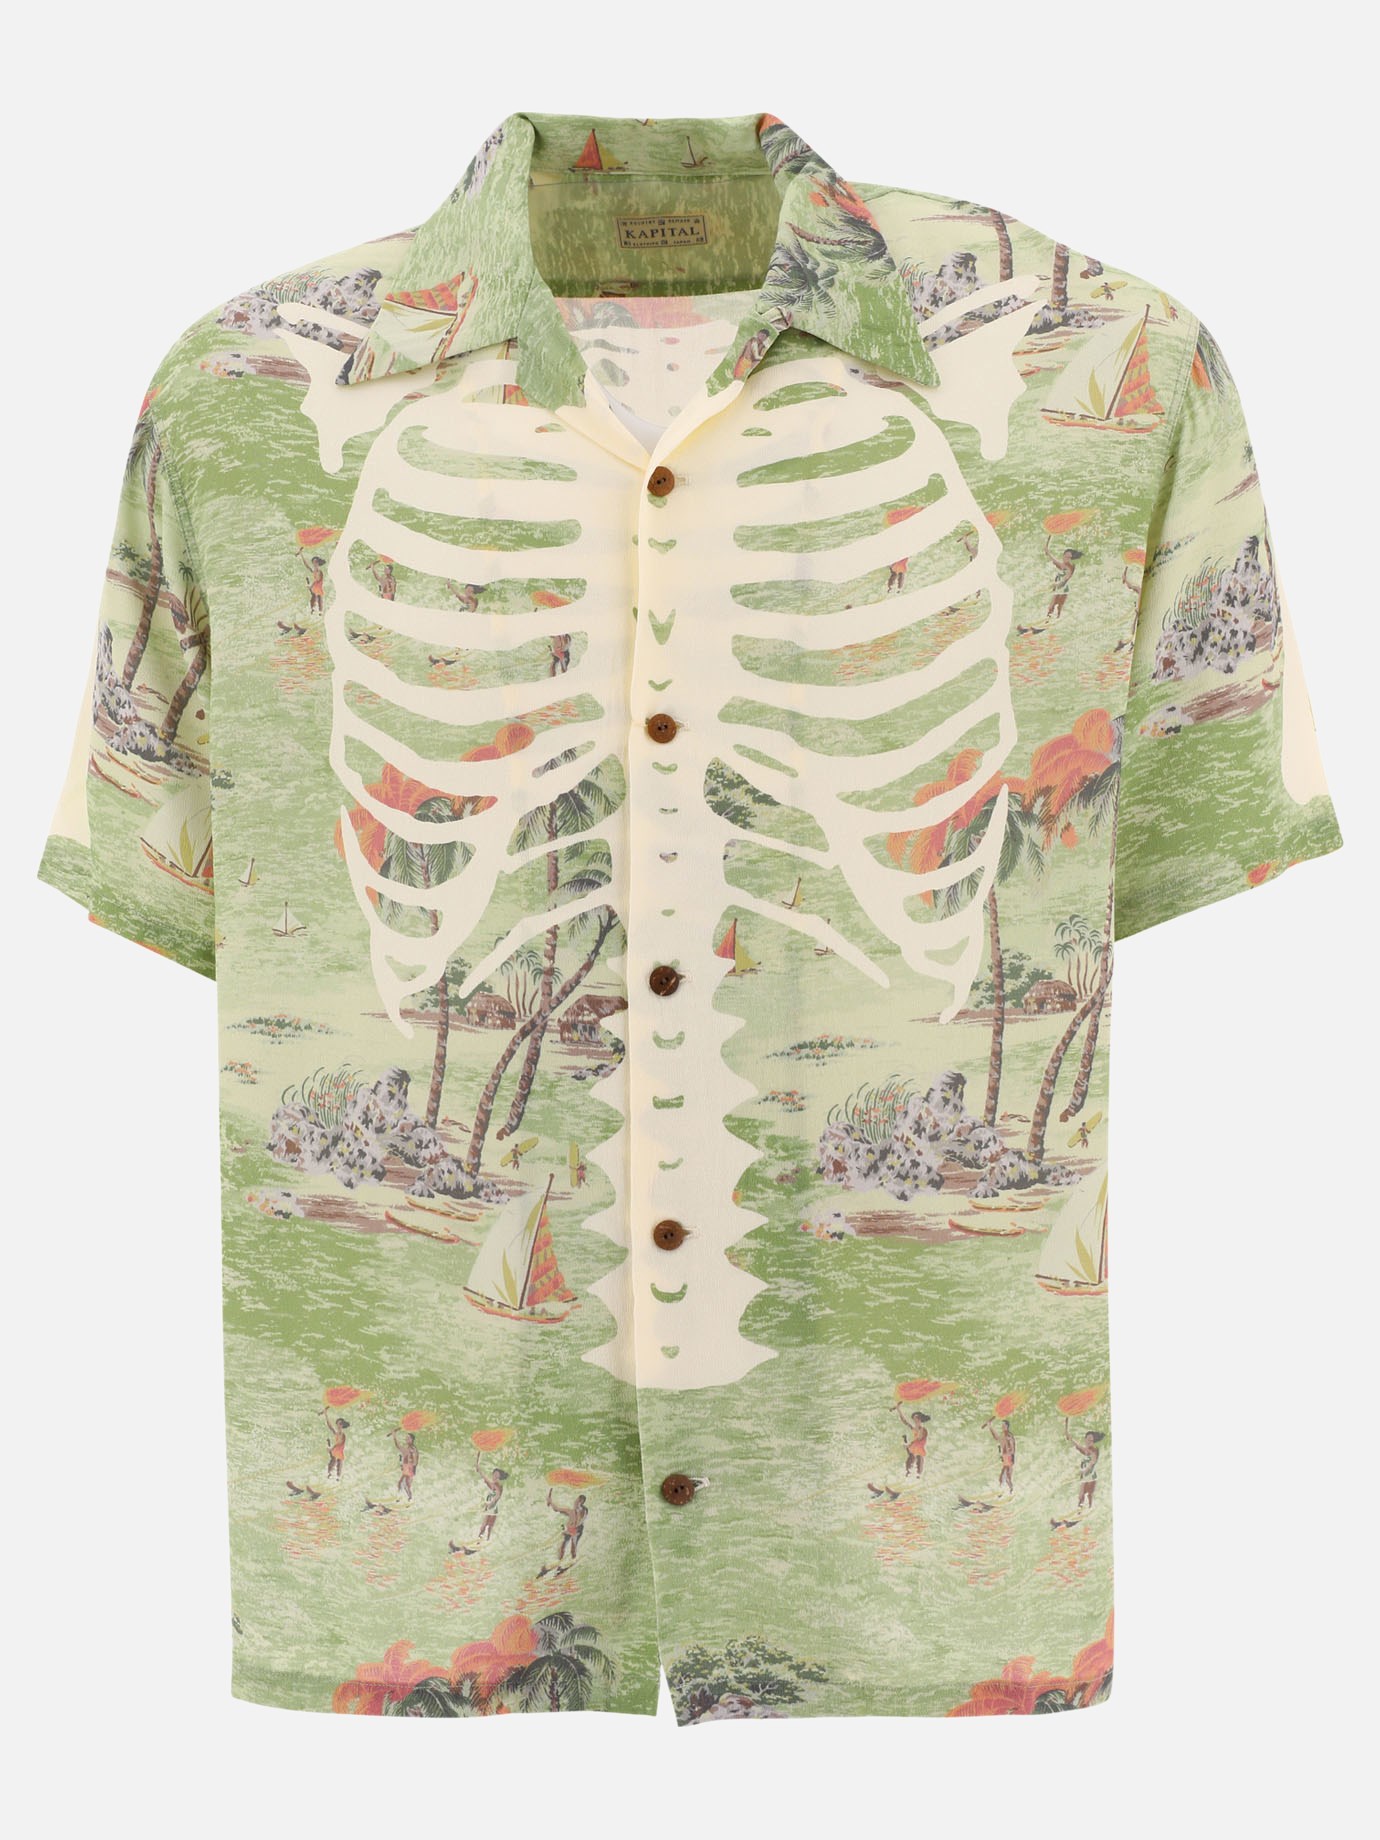  Bone Aloha  shirtby Kapital - 0